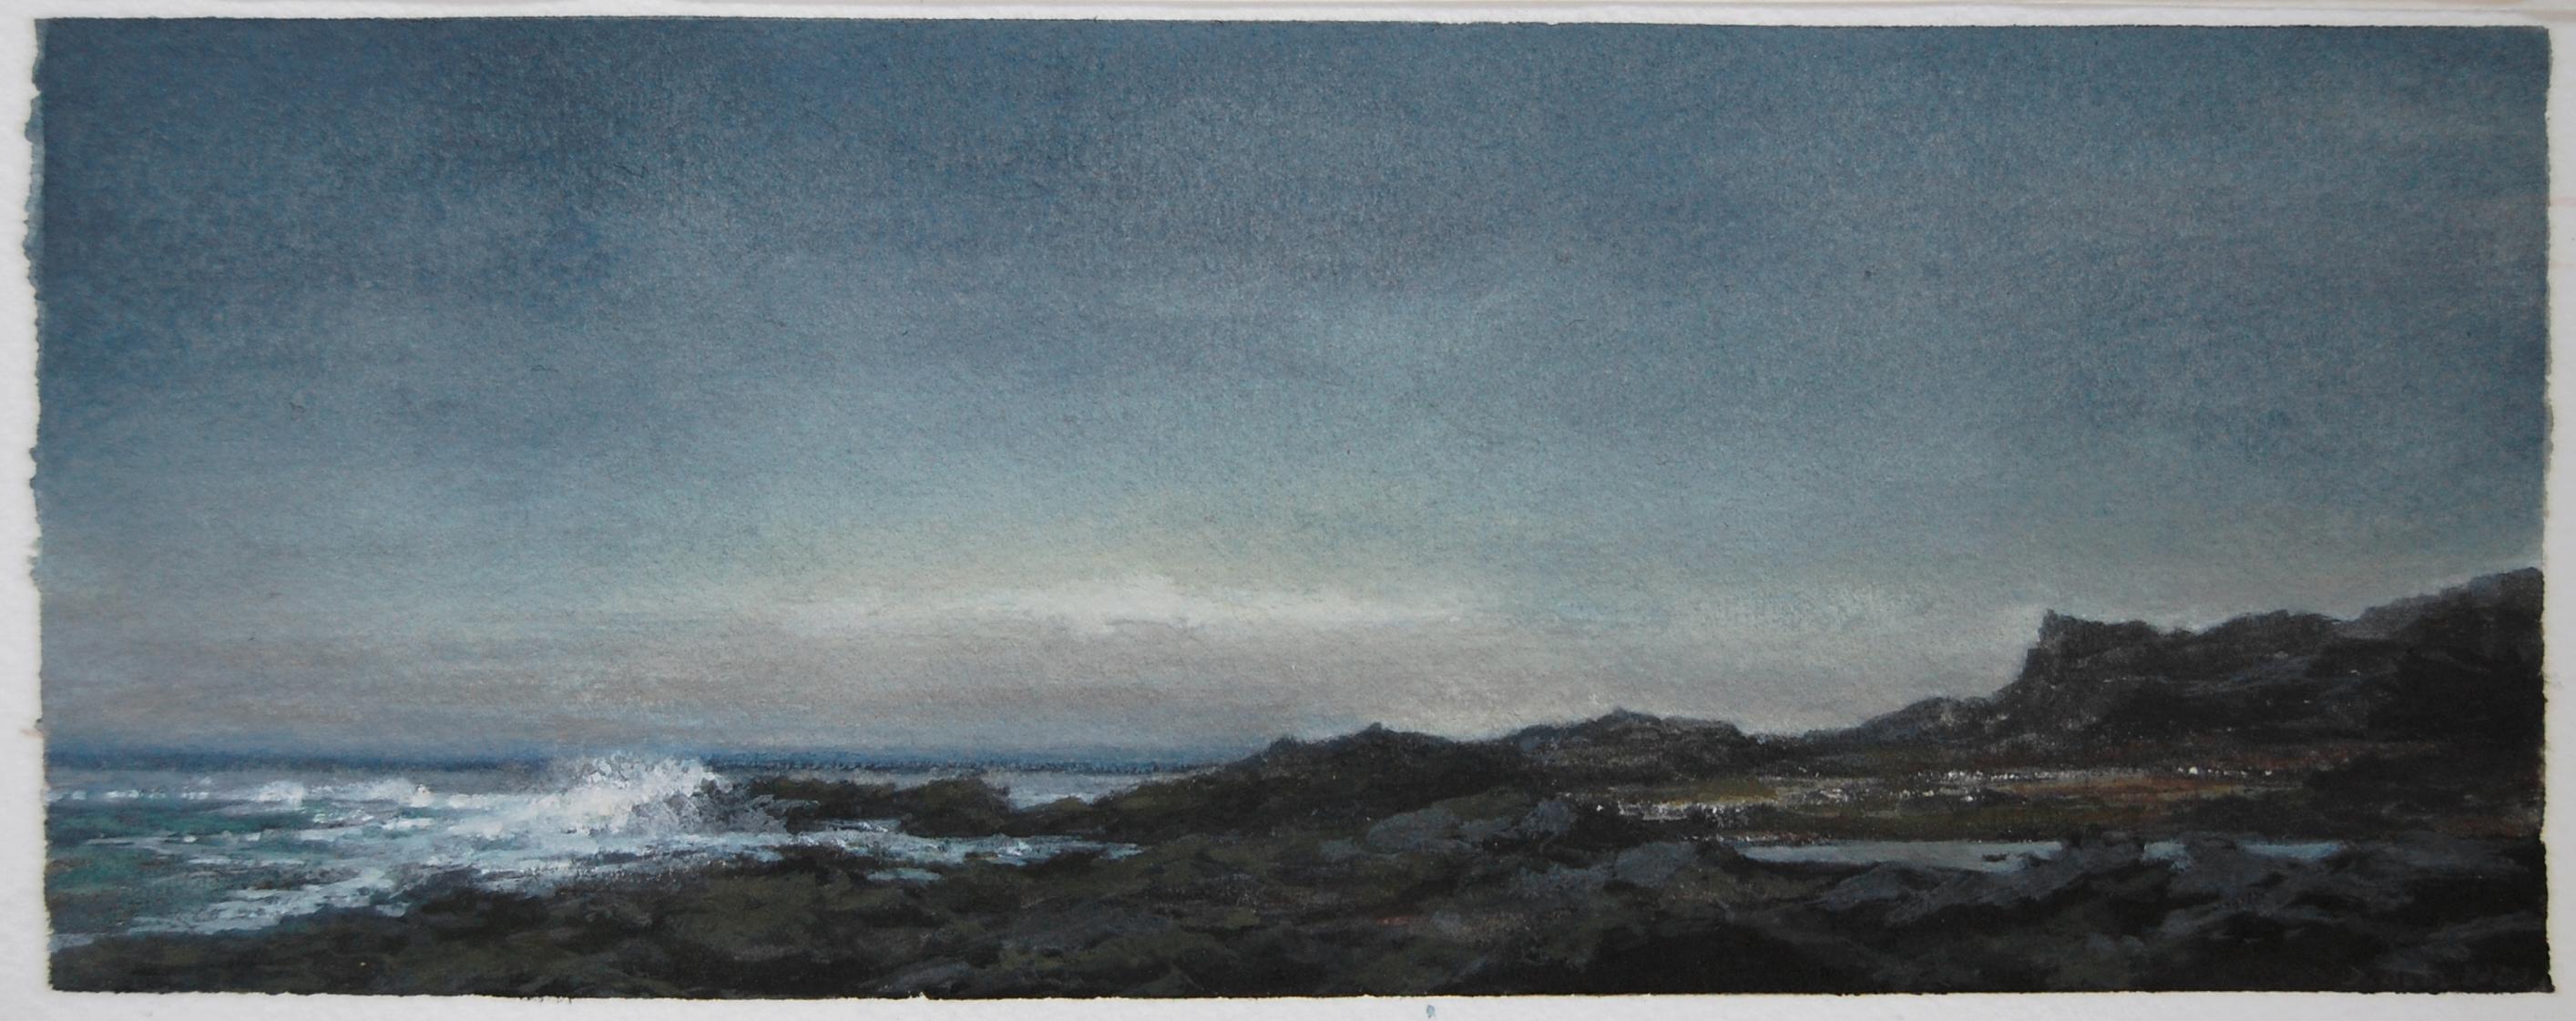 Shore, towards dusk, northeastern seascape watercolor